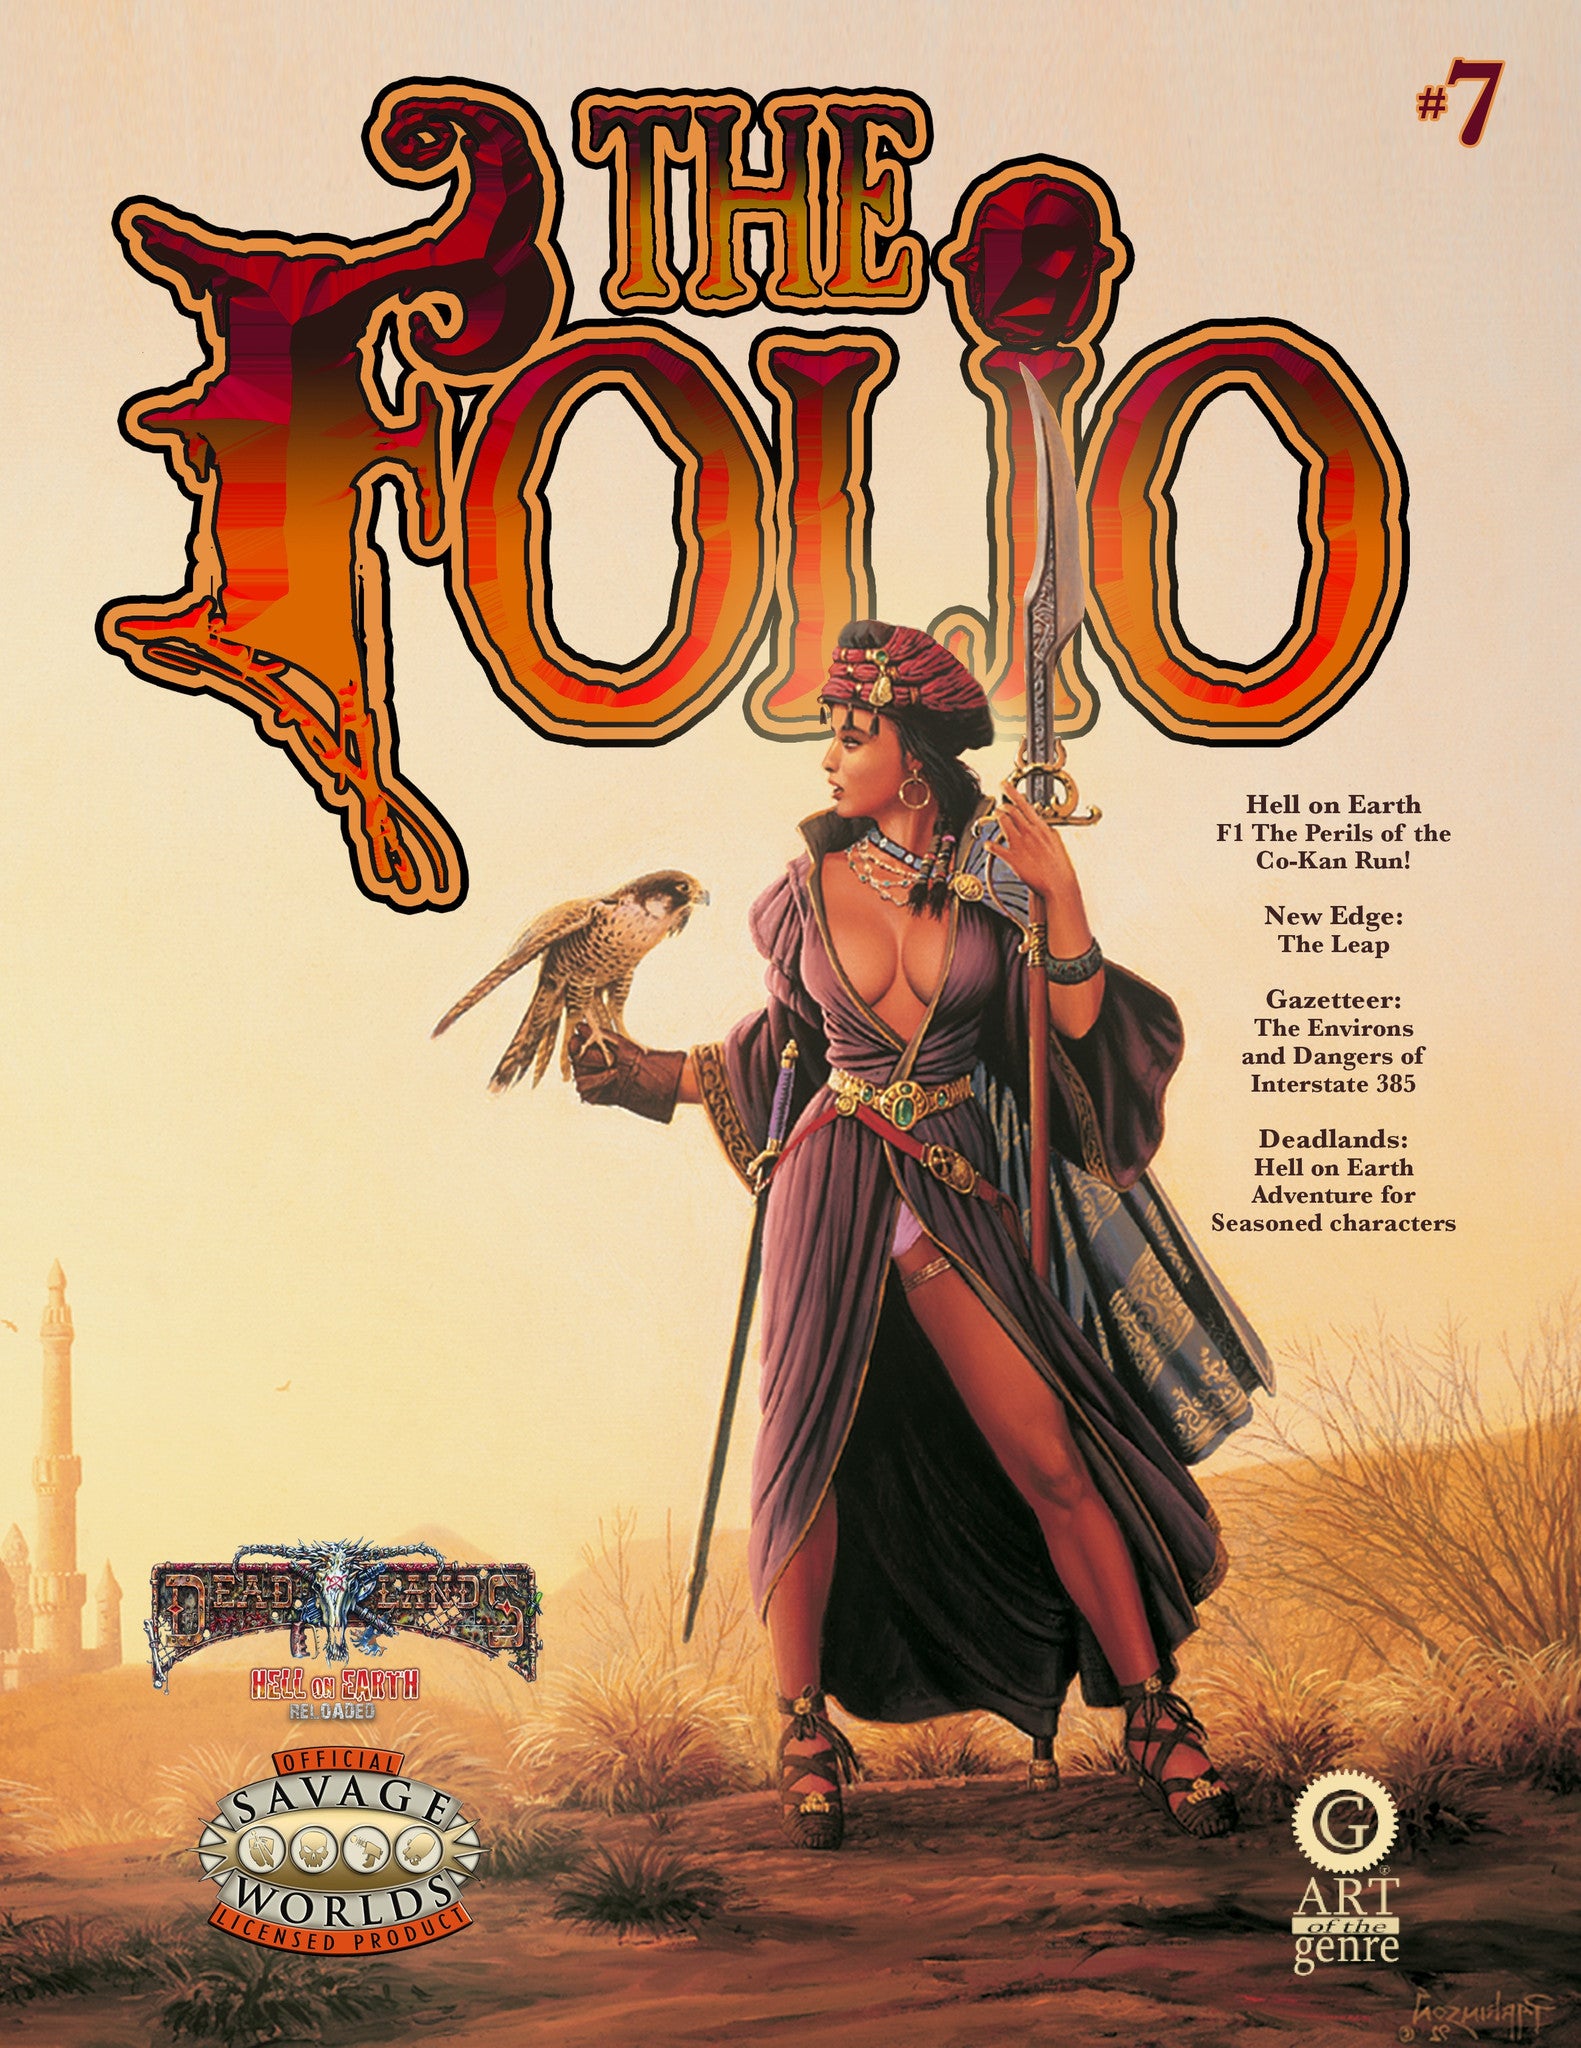 THE FOLIO #7 [PRINT EDITION]